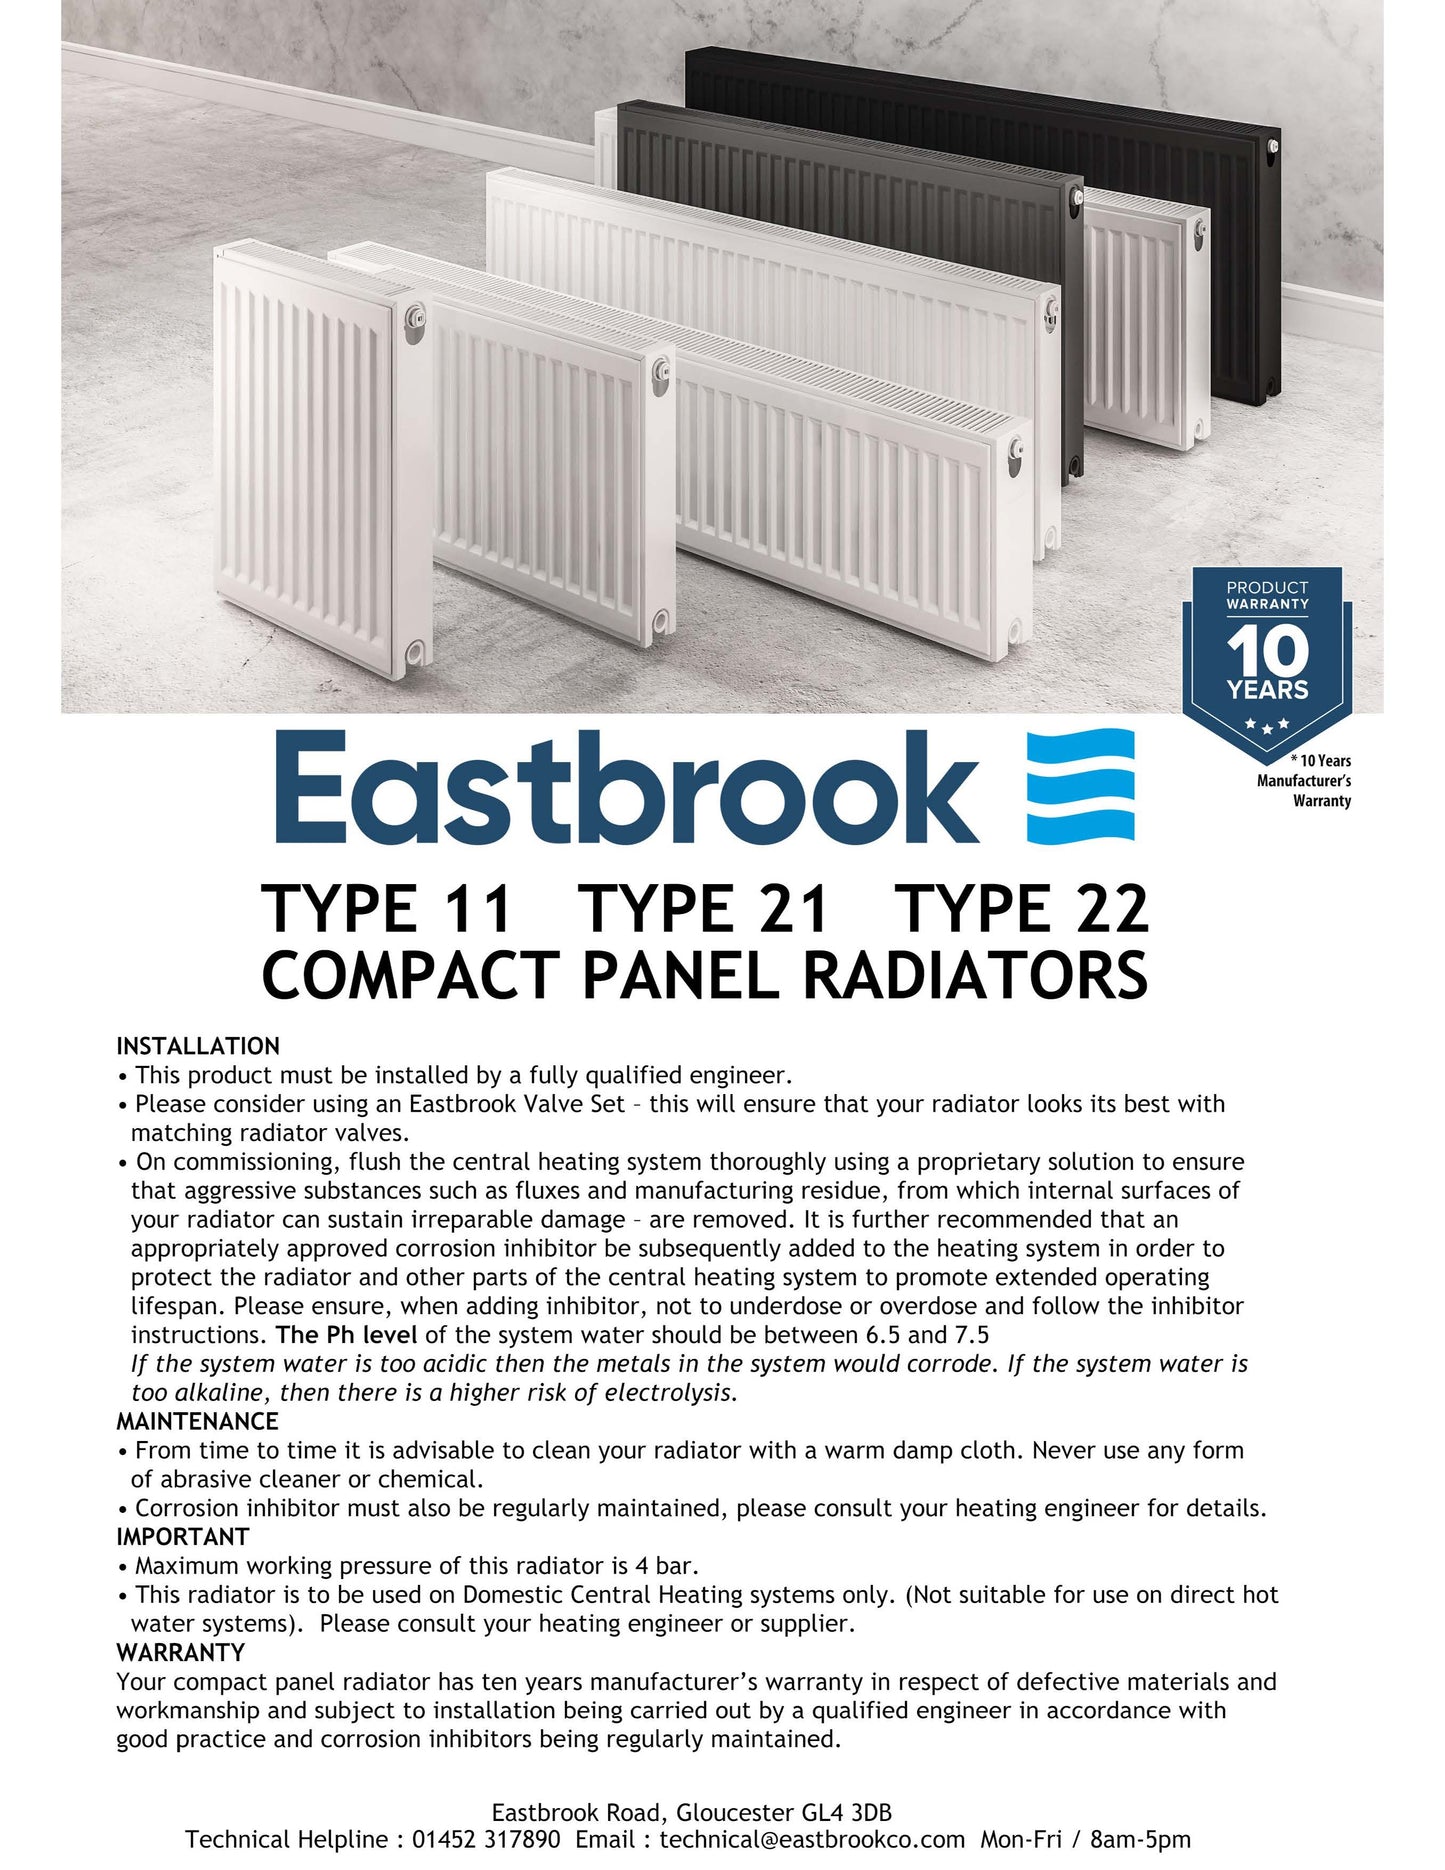 Eastbrook Type 11 Single Panel Matt Black Radiator 600mm High x 1600mm Wide Technical Image 1 25.0076